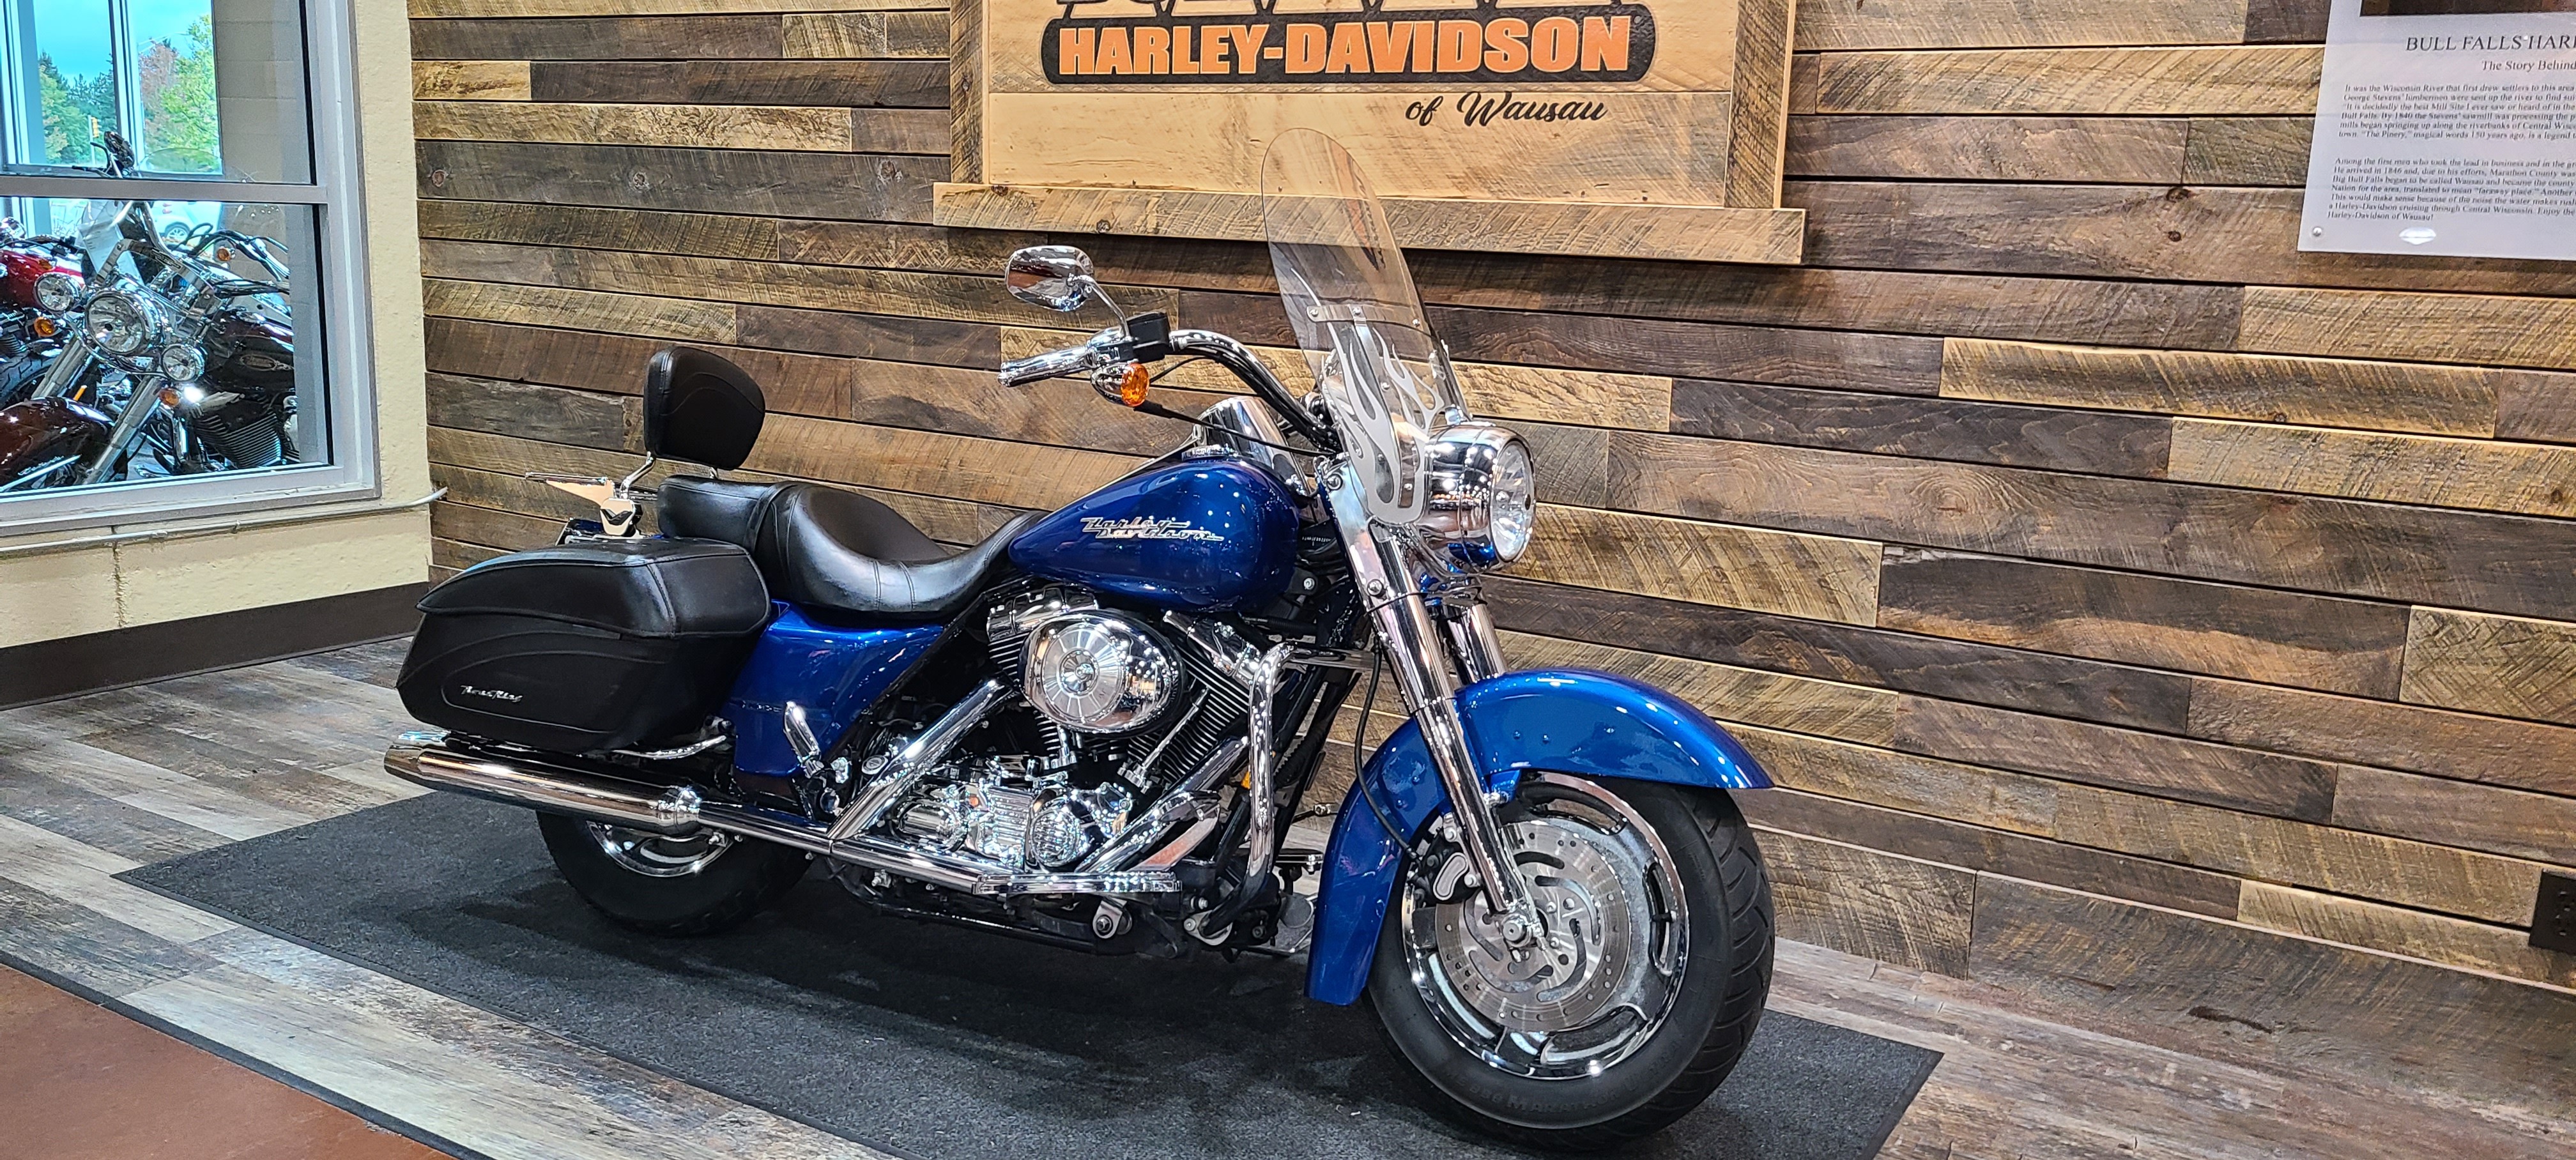 2005 Harley-Davidson Road King Custom at Bull Falls Harley-Davidson